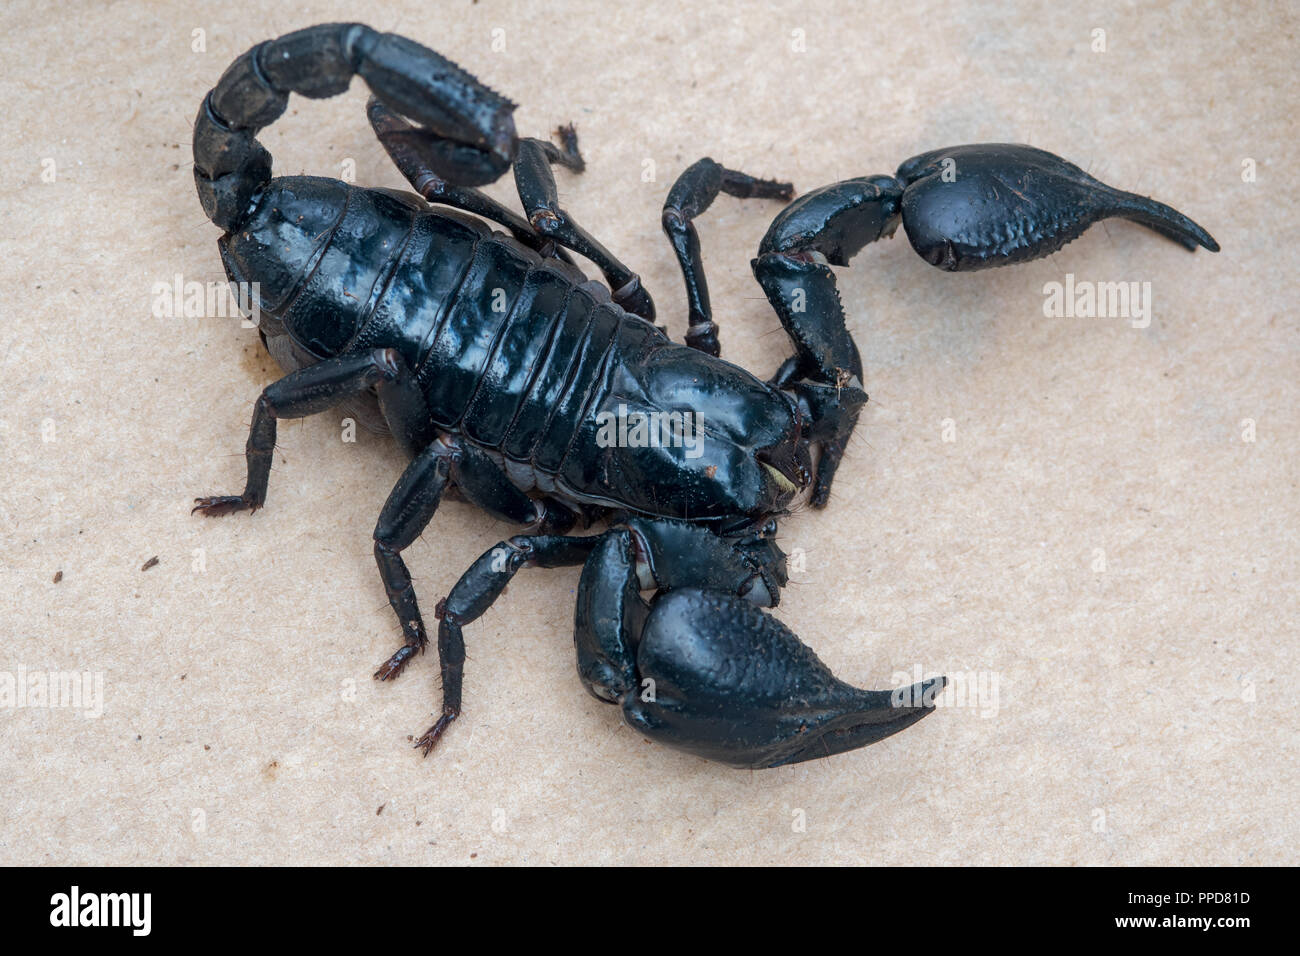 Blue Asian Forest Scorpion (Heterometrus spinifer) Stock Photo